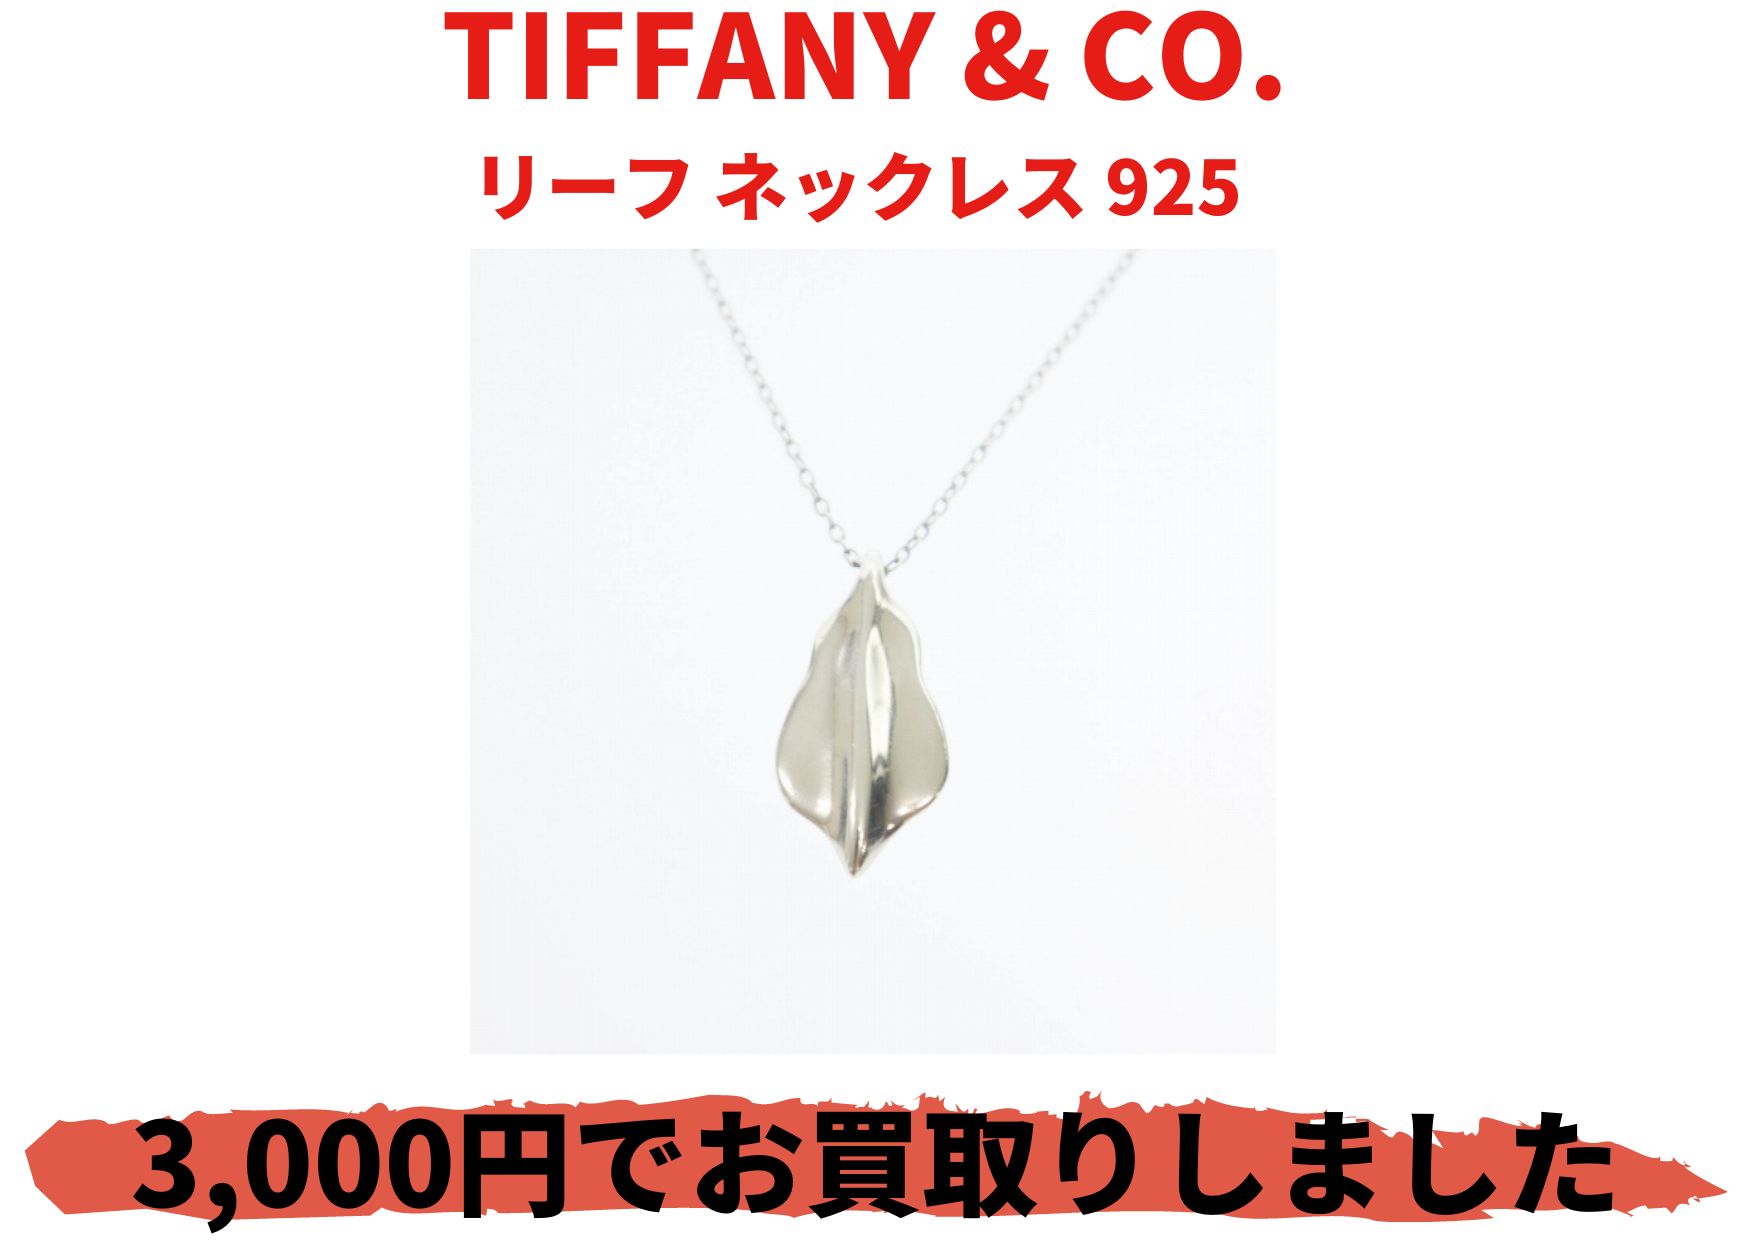 TIFFANY & CO. リーフ ネックレス 925